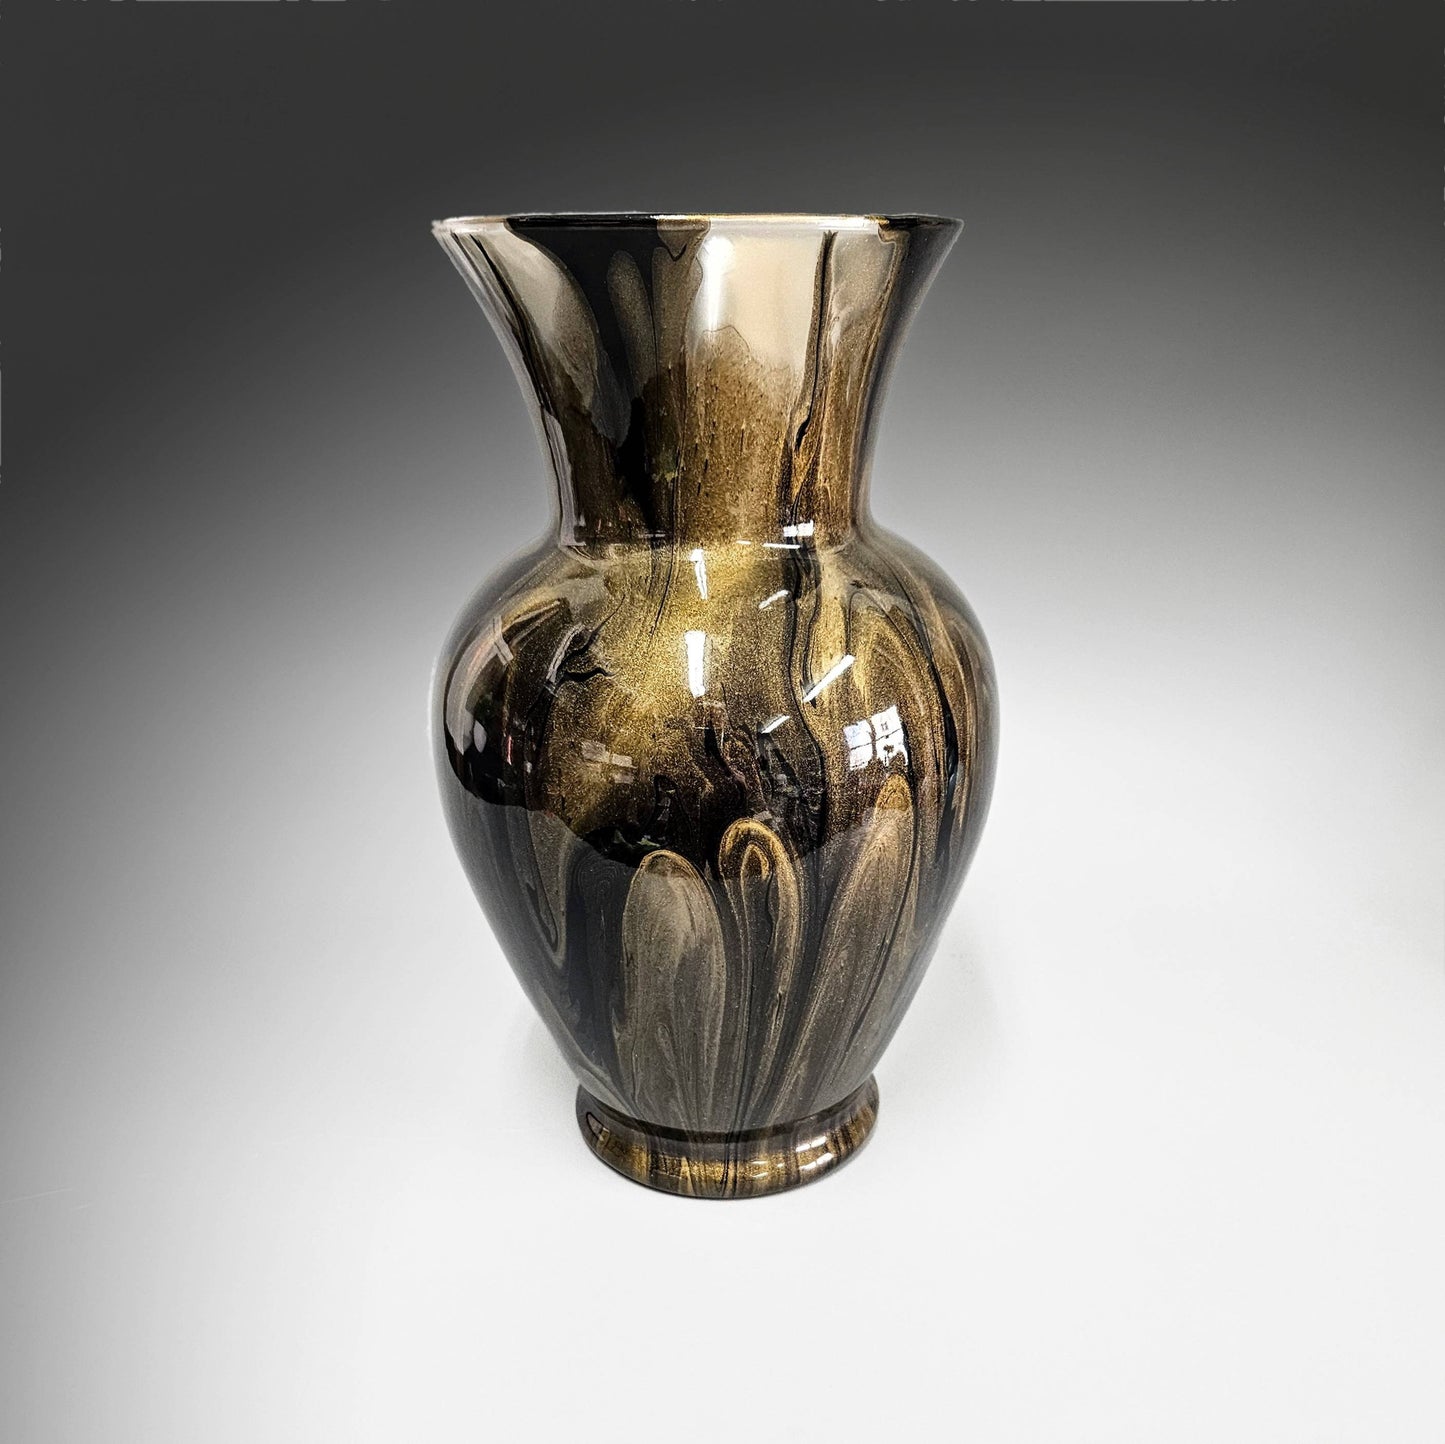 Black and Metallic Gold Large Centerpiece Vase